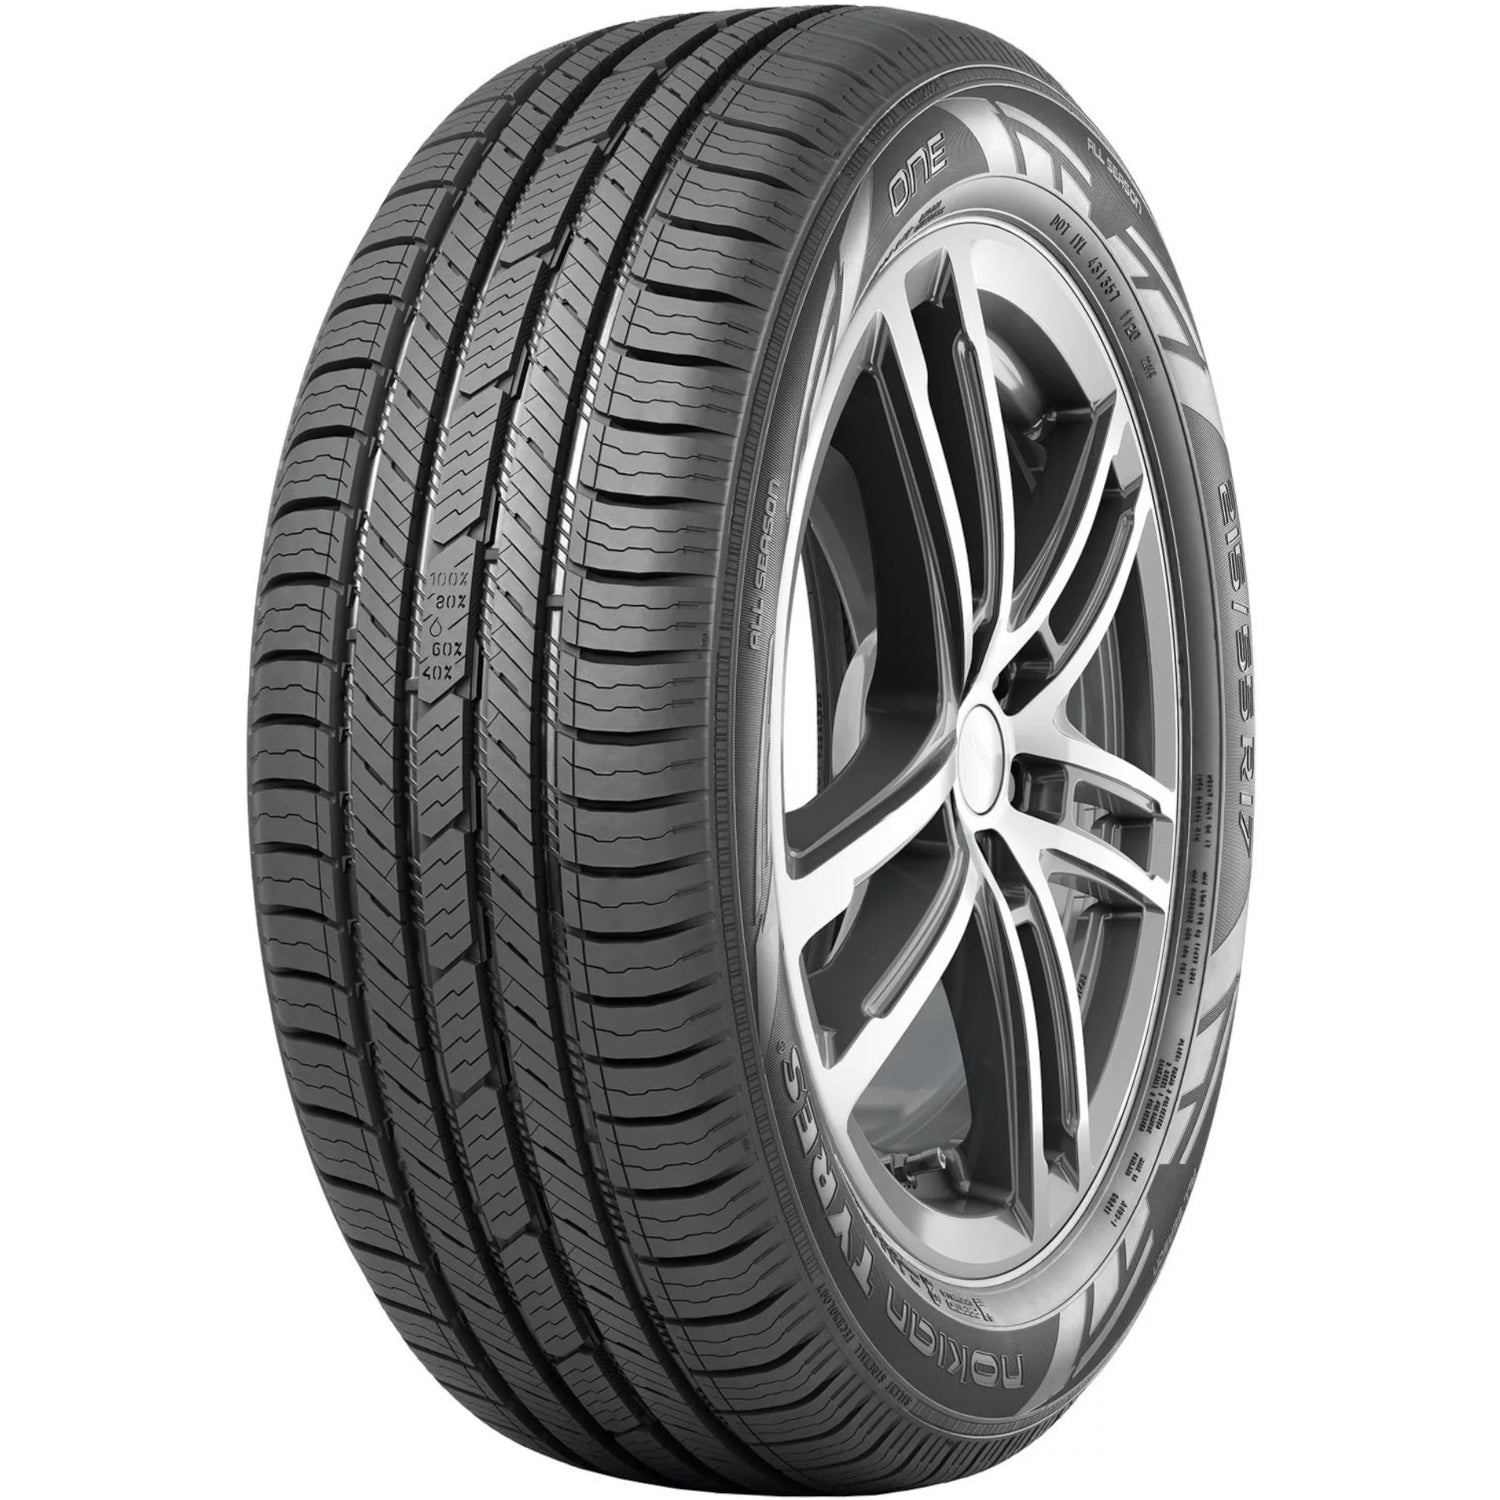 NOKIAN ONE 235/60R16 (27.1X9.3R 16) Tires